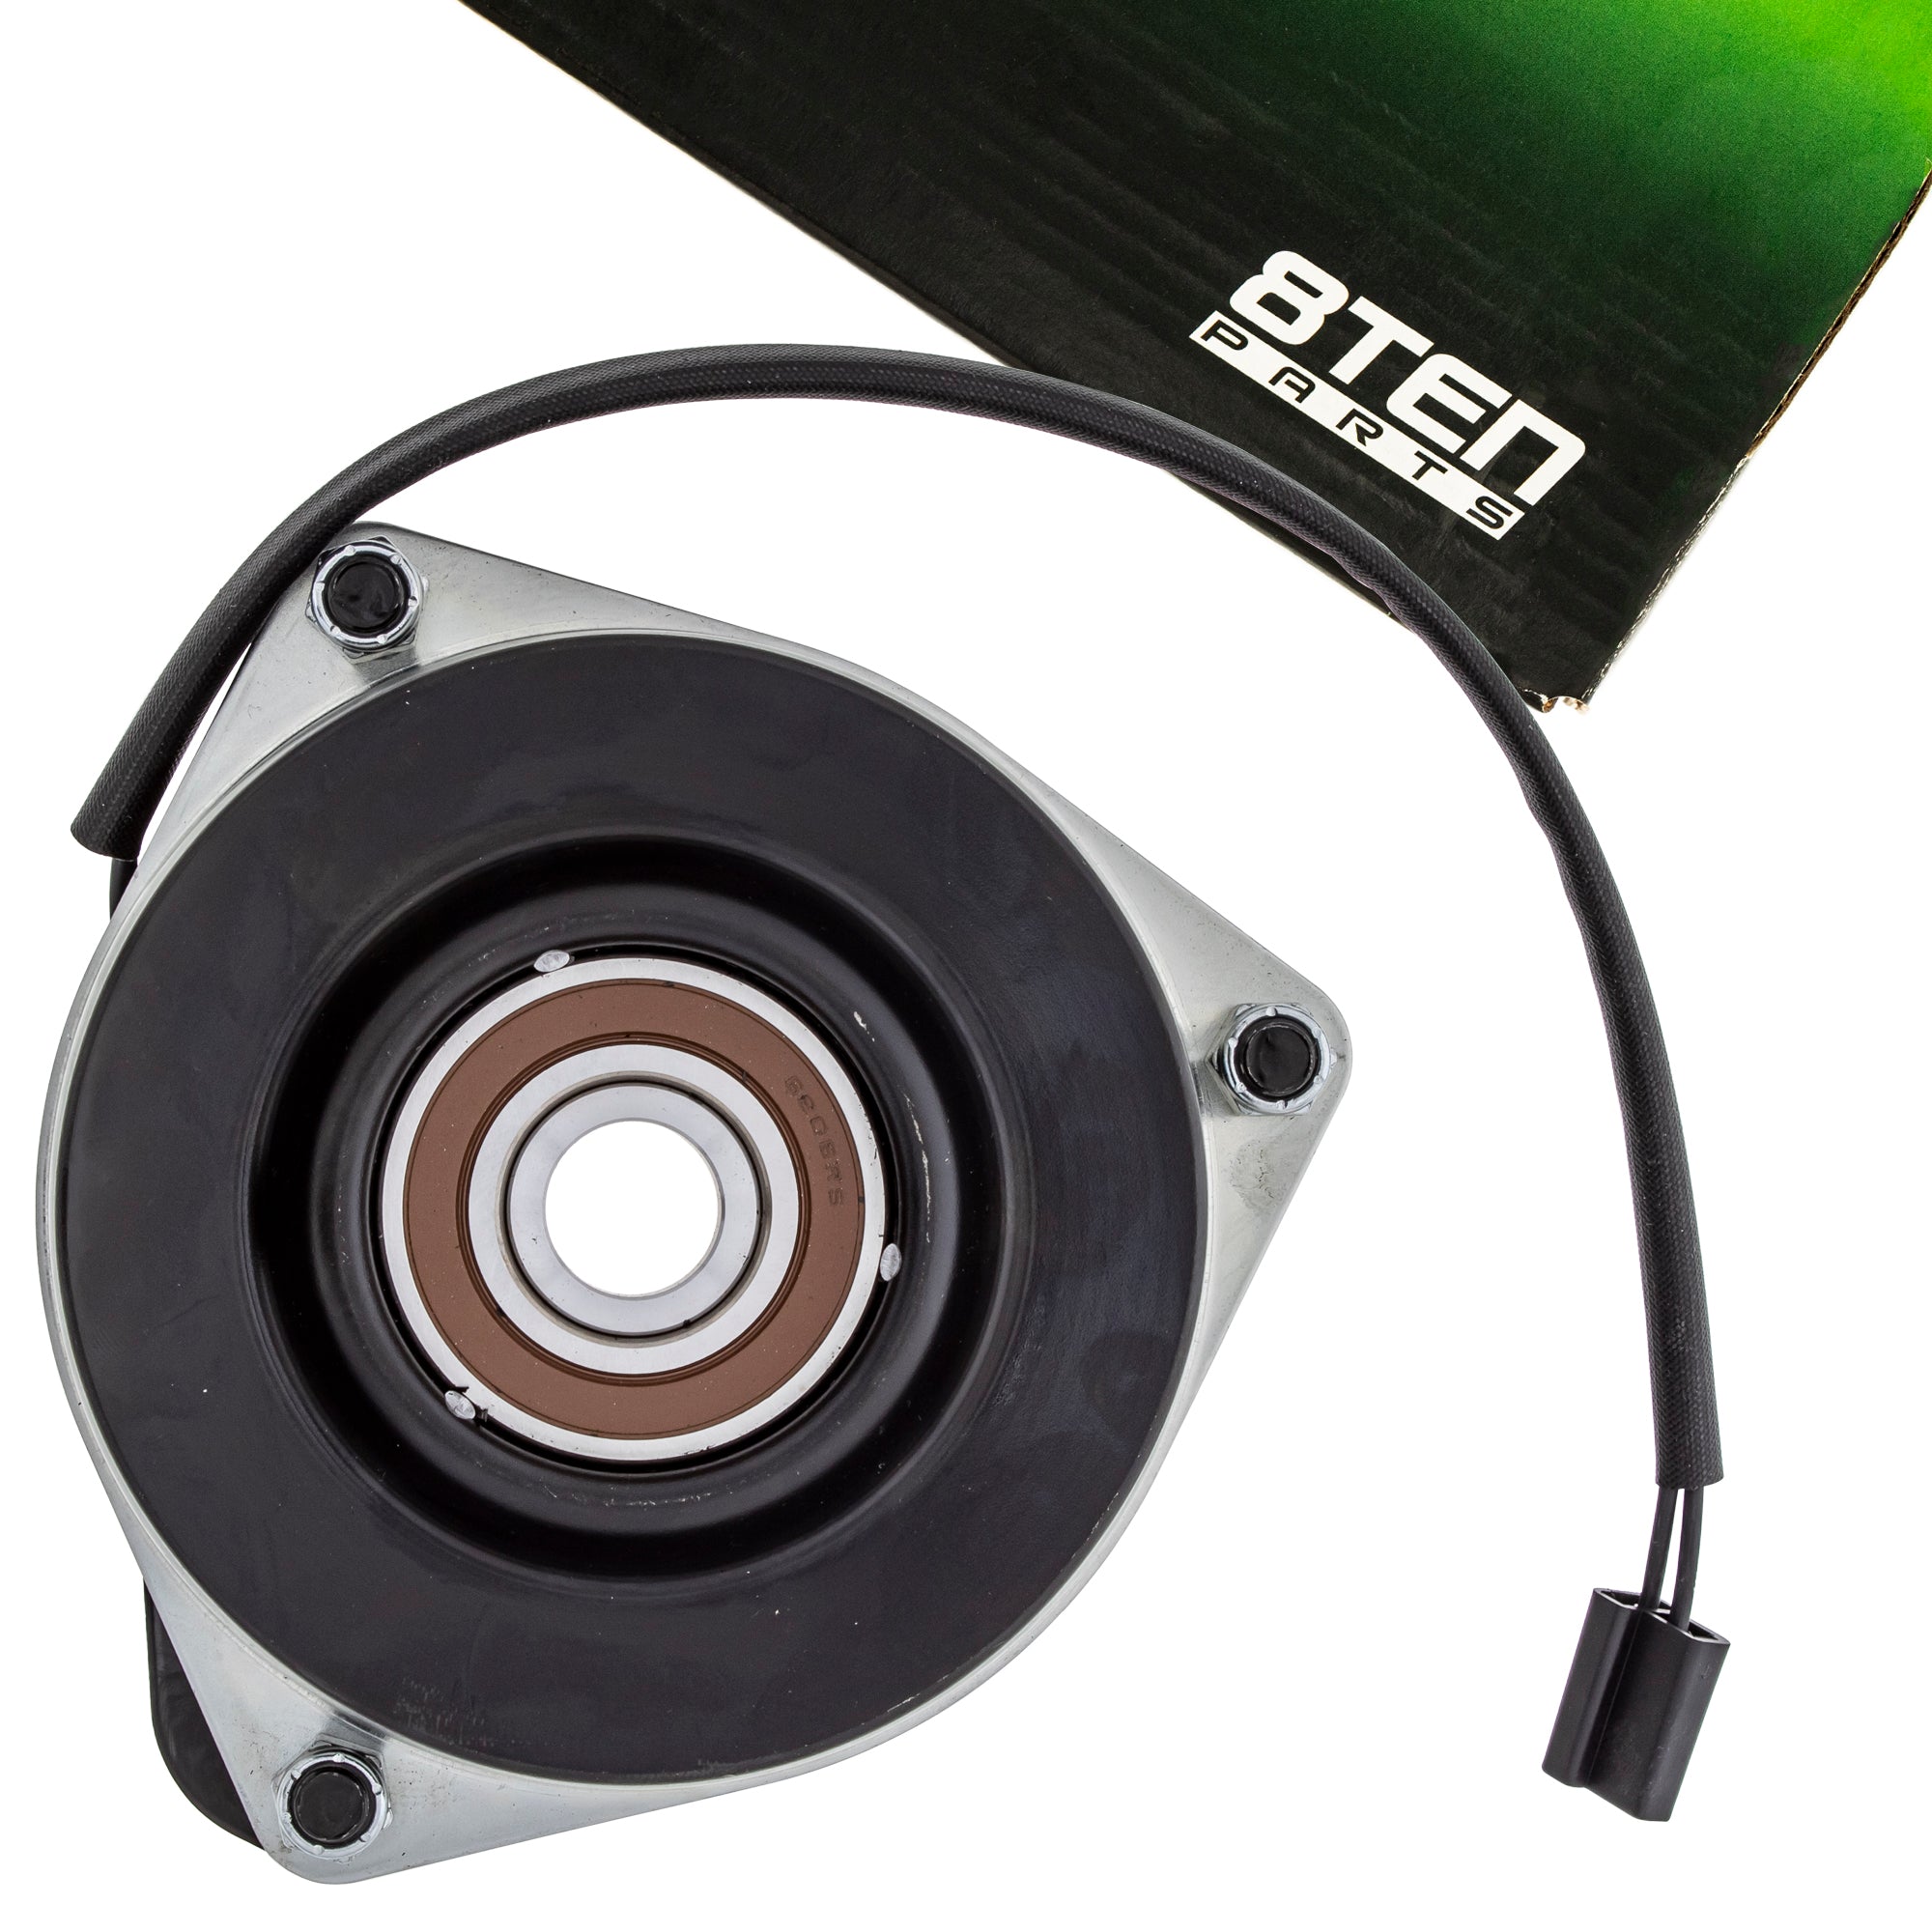 Belt & PTO Clutch Kit for Simplicity ZT 2300 Snapper RZT 2552 7103789